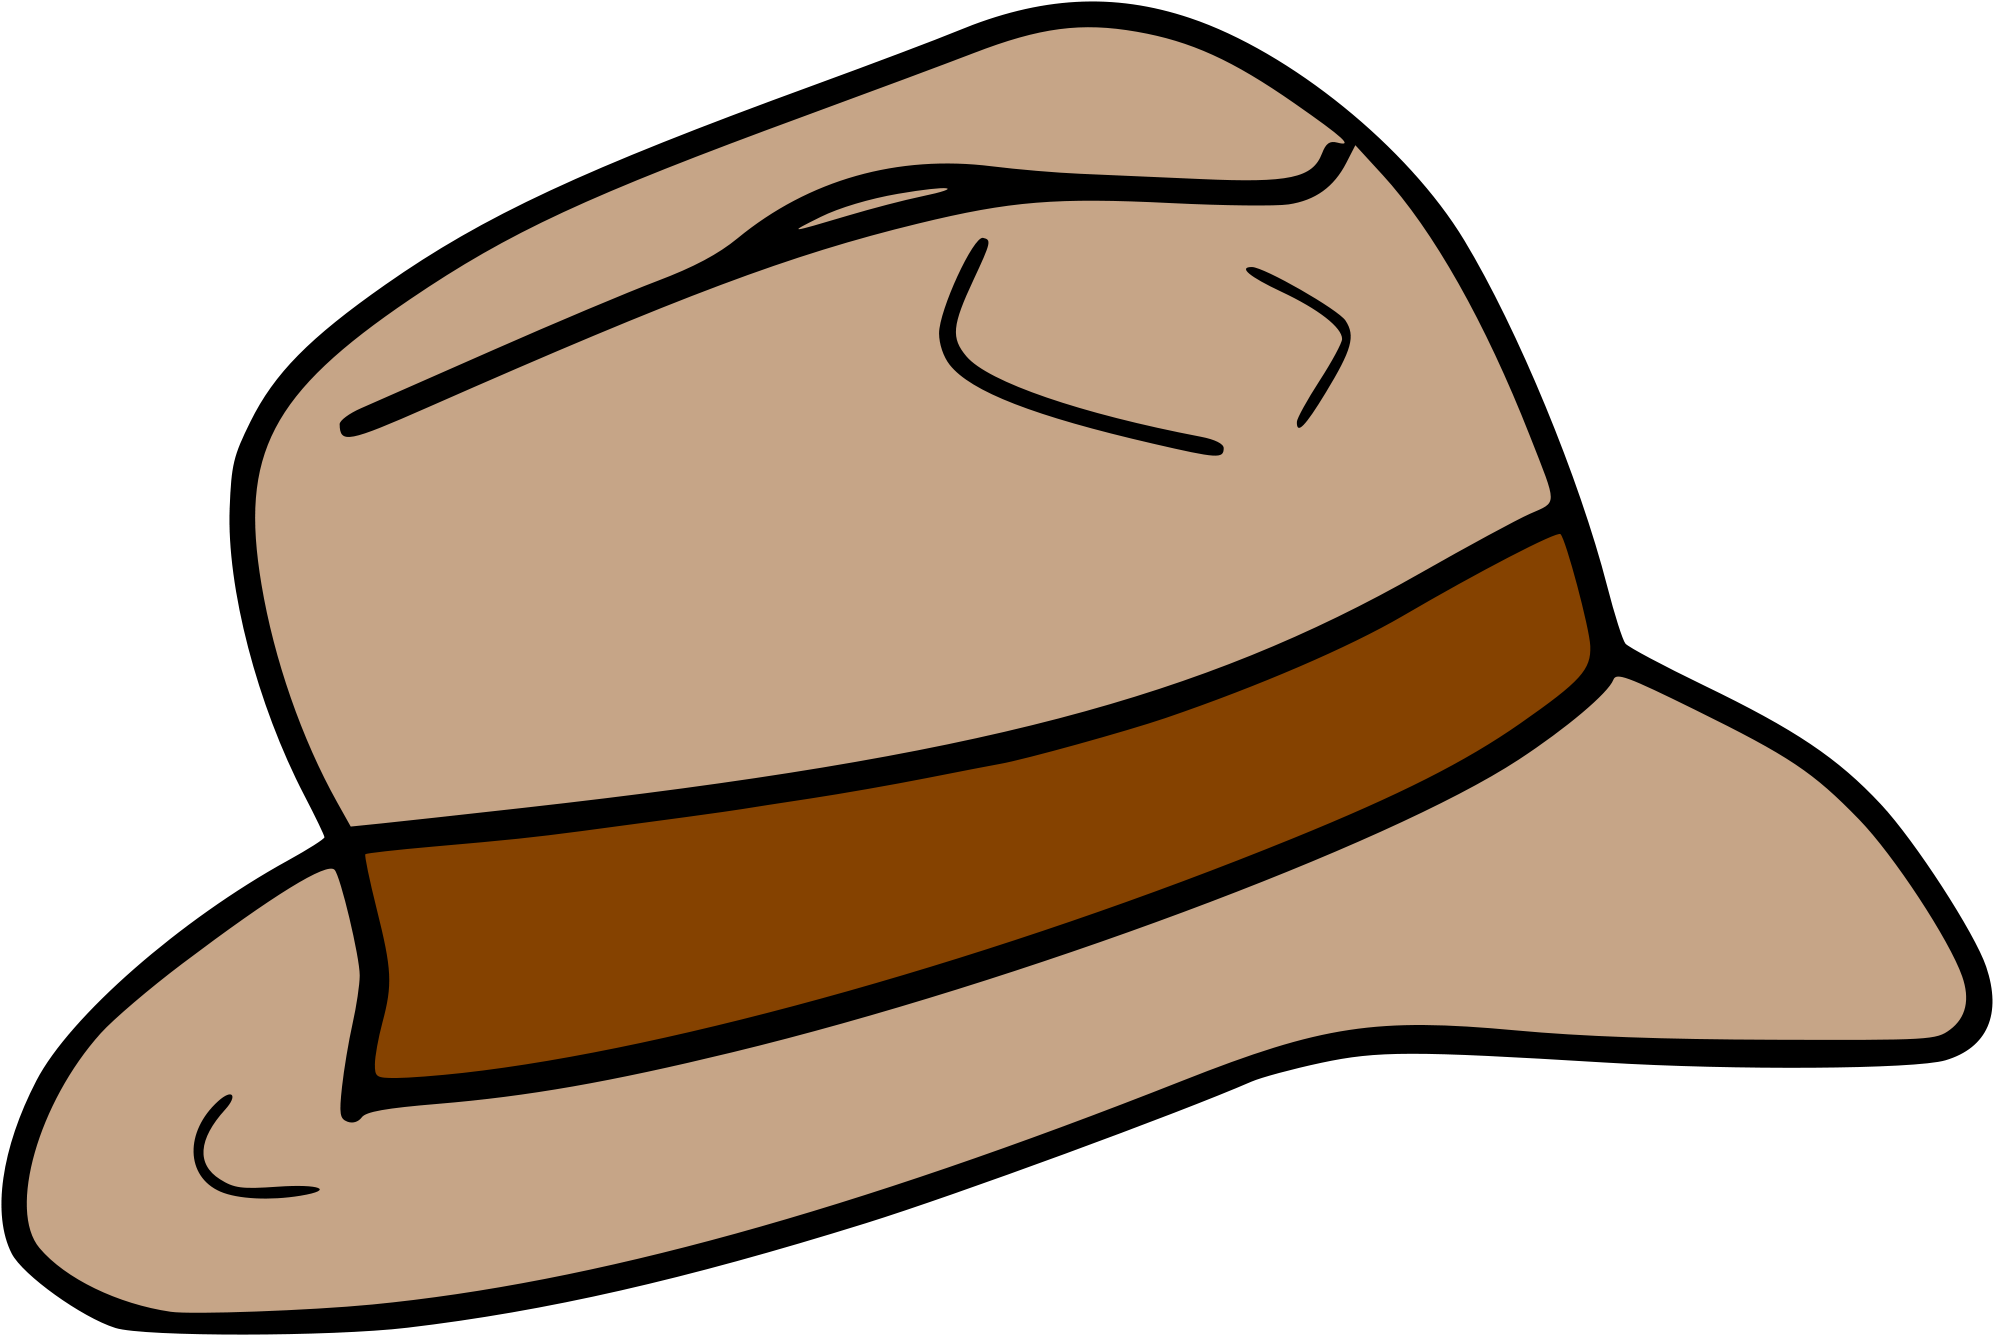 Download Open - Indiana Jones Hat Cartoon PNG Image with No Background -  